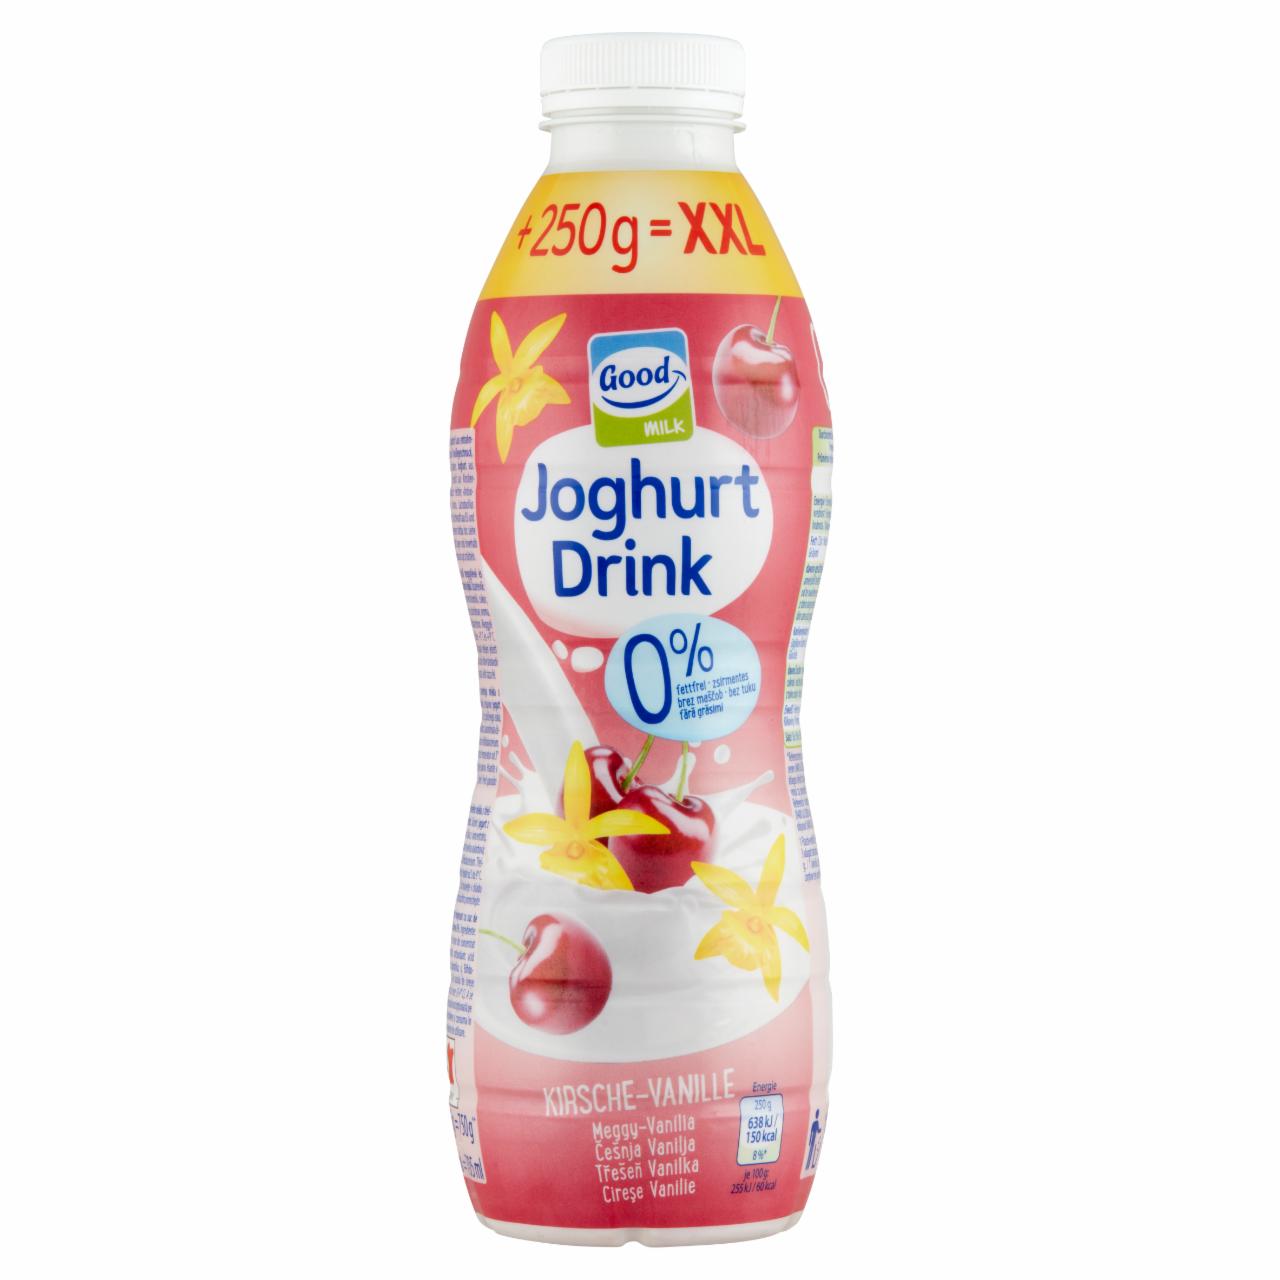 Képek - Good Milk joghurtital meggy-vanília 0,1% 750 g